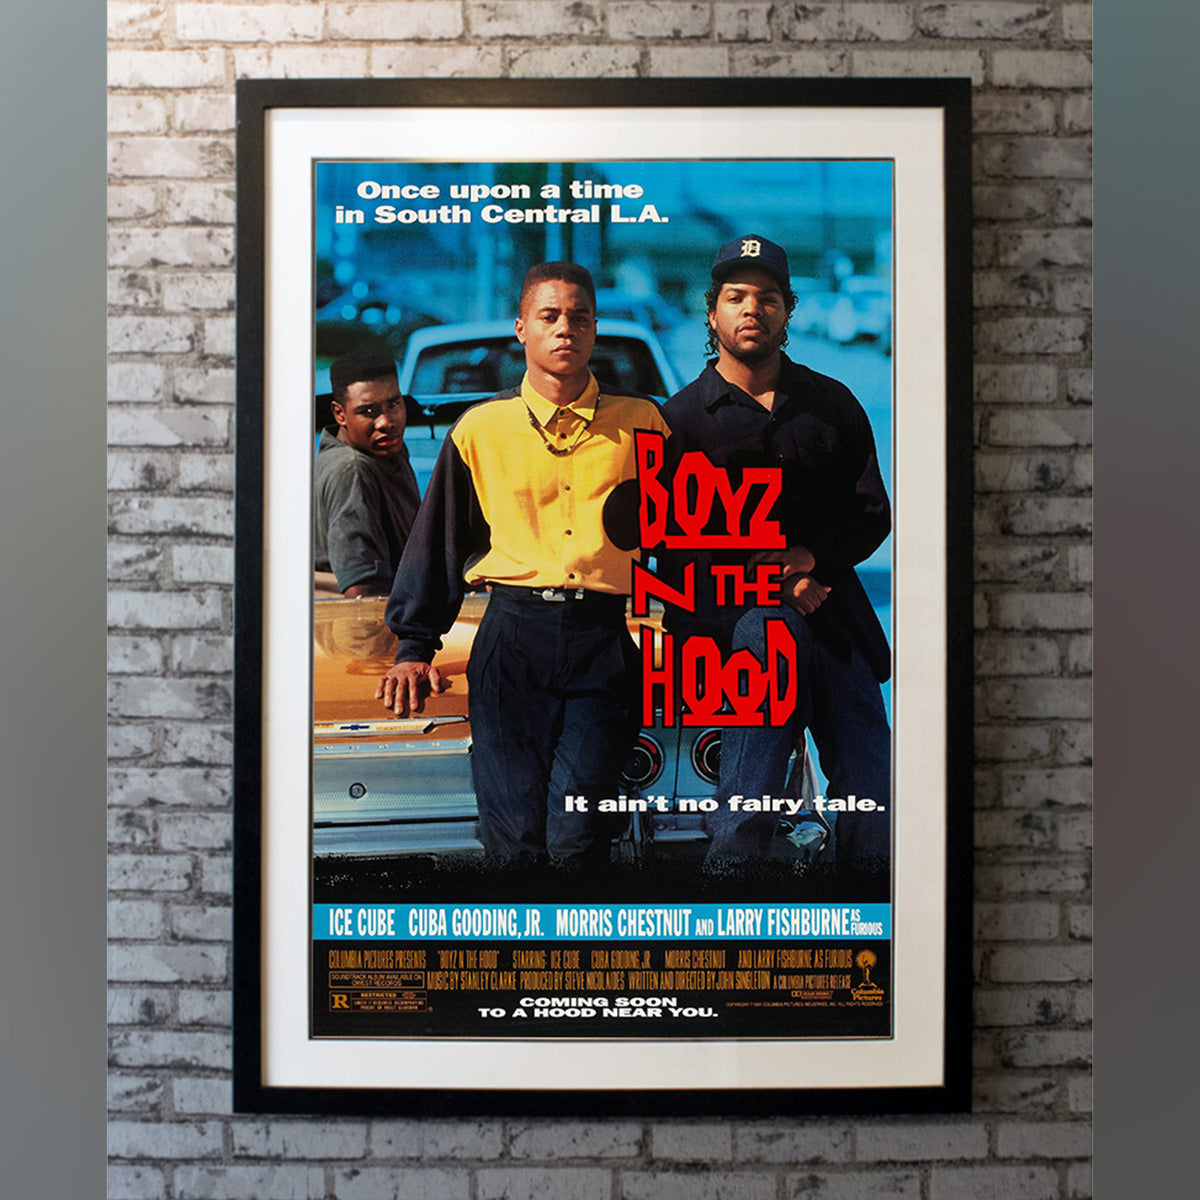 Original Movie Poster of Boyz N The Hood (1991)